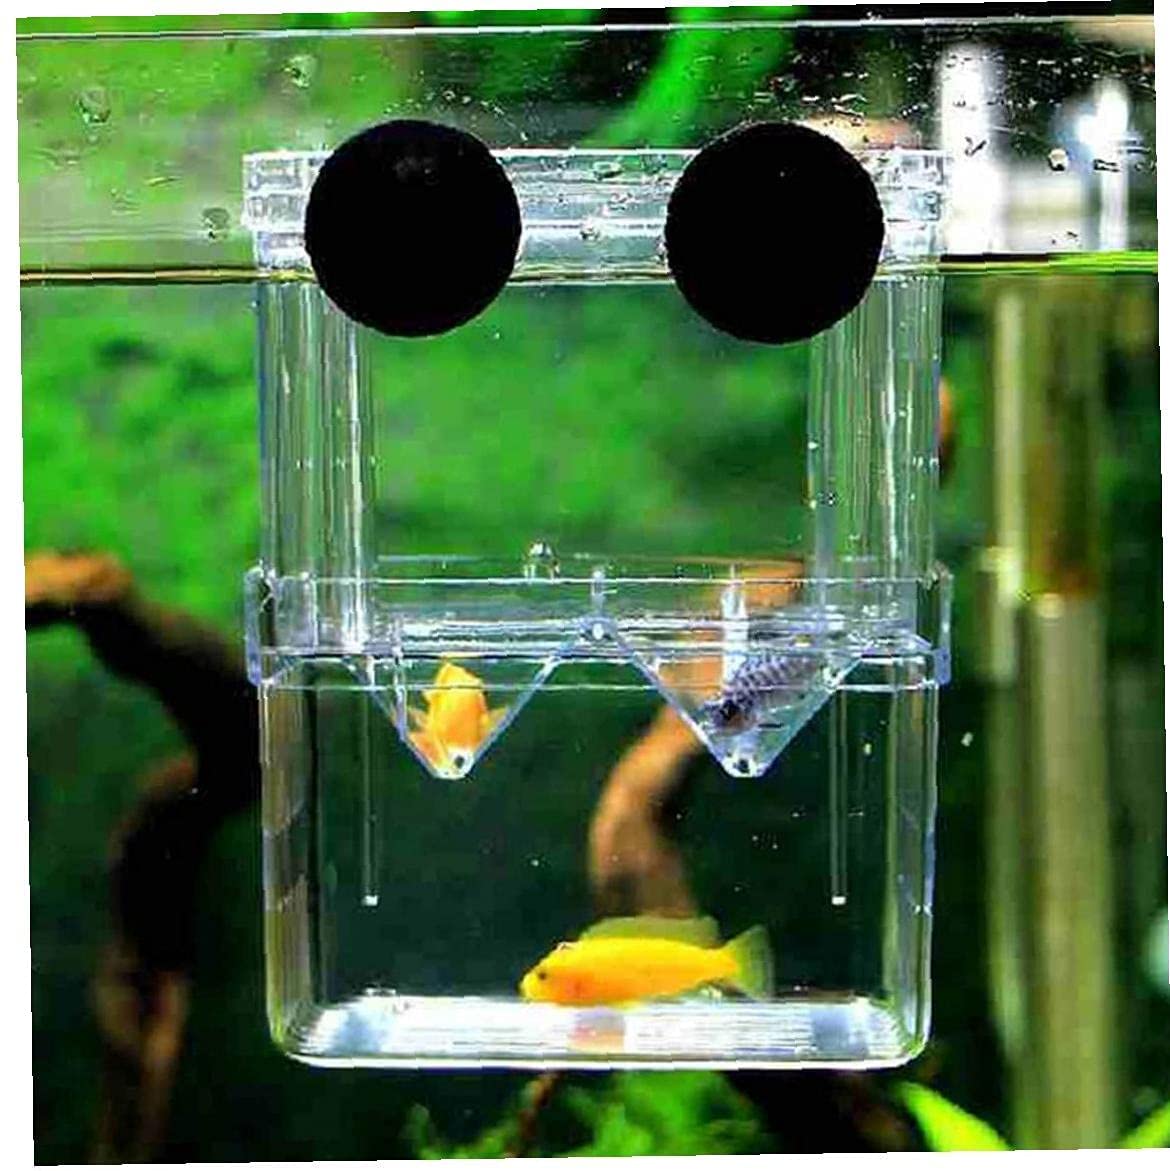 Double-Deck Clear Fish Breeding Isolation Box Aquarium Clear Hatchery Fish Tank Incubator Fish House - e4cents